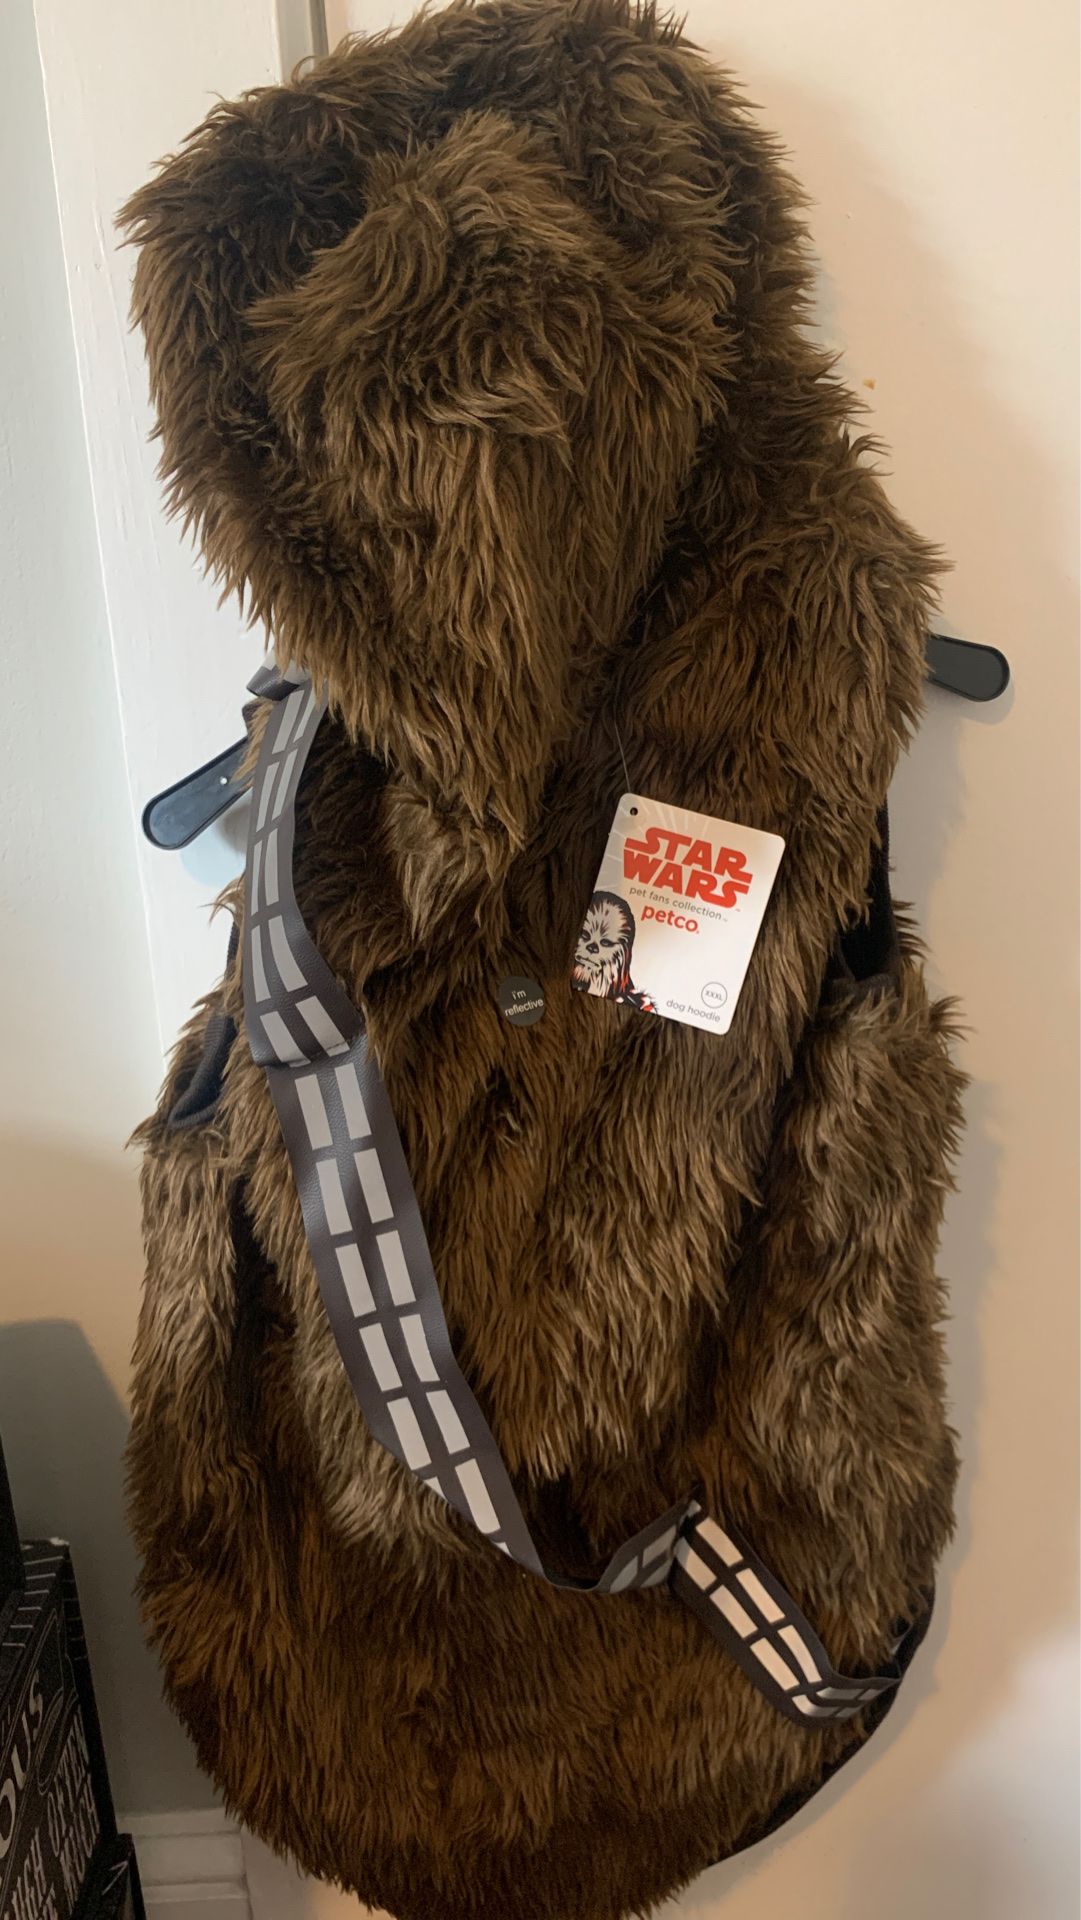 Star Wars Chewbacca Dog Costume